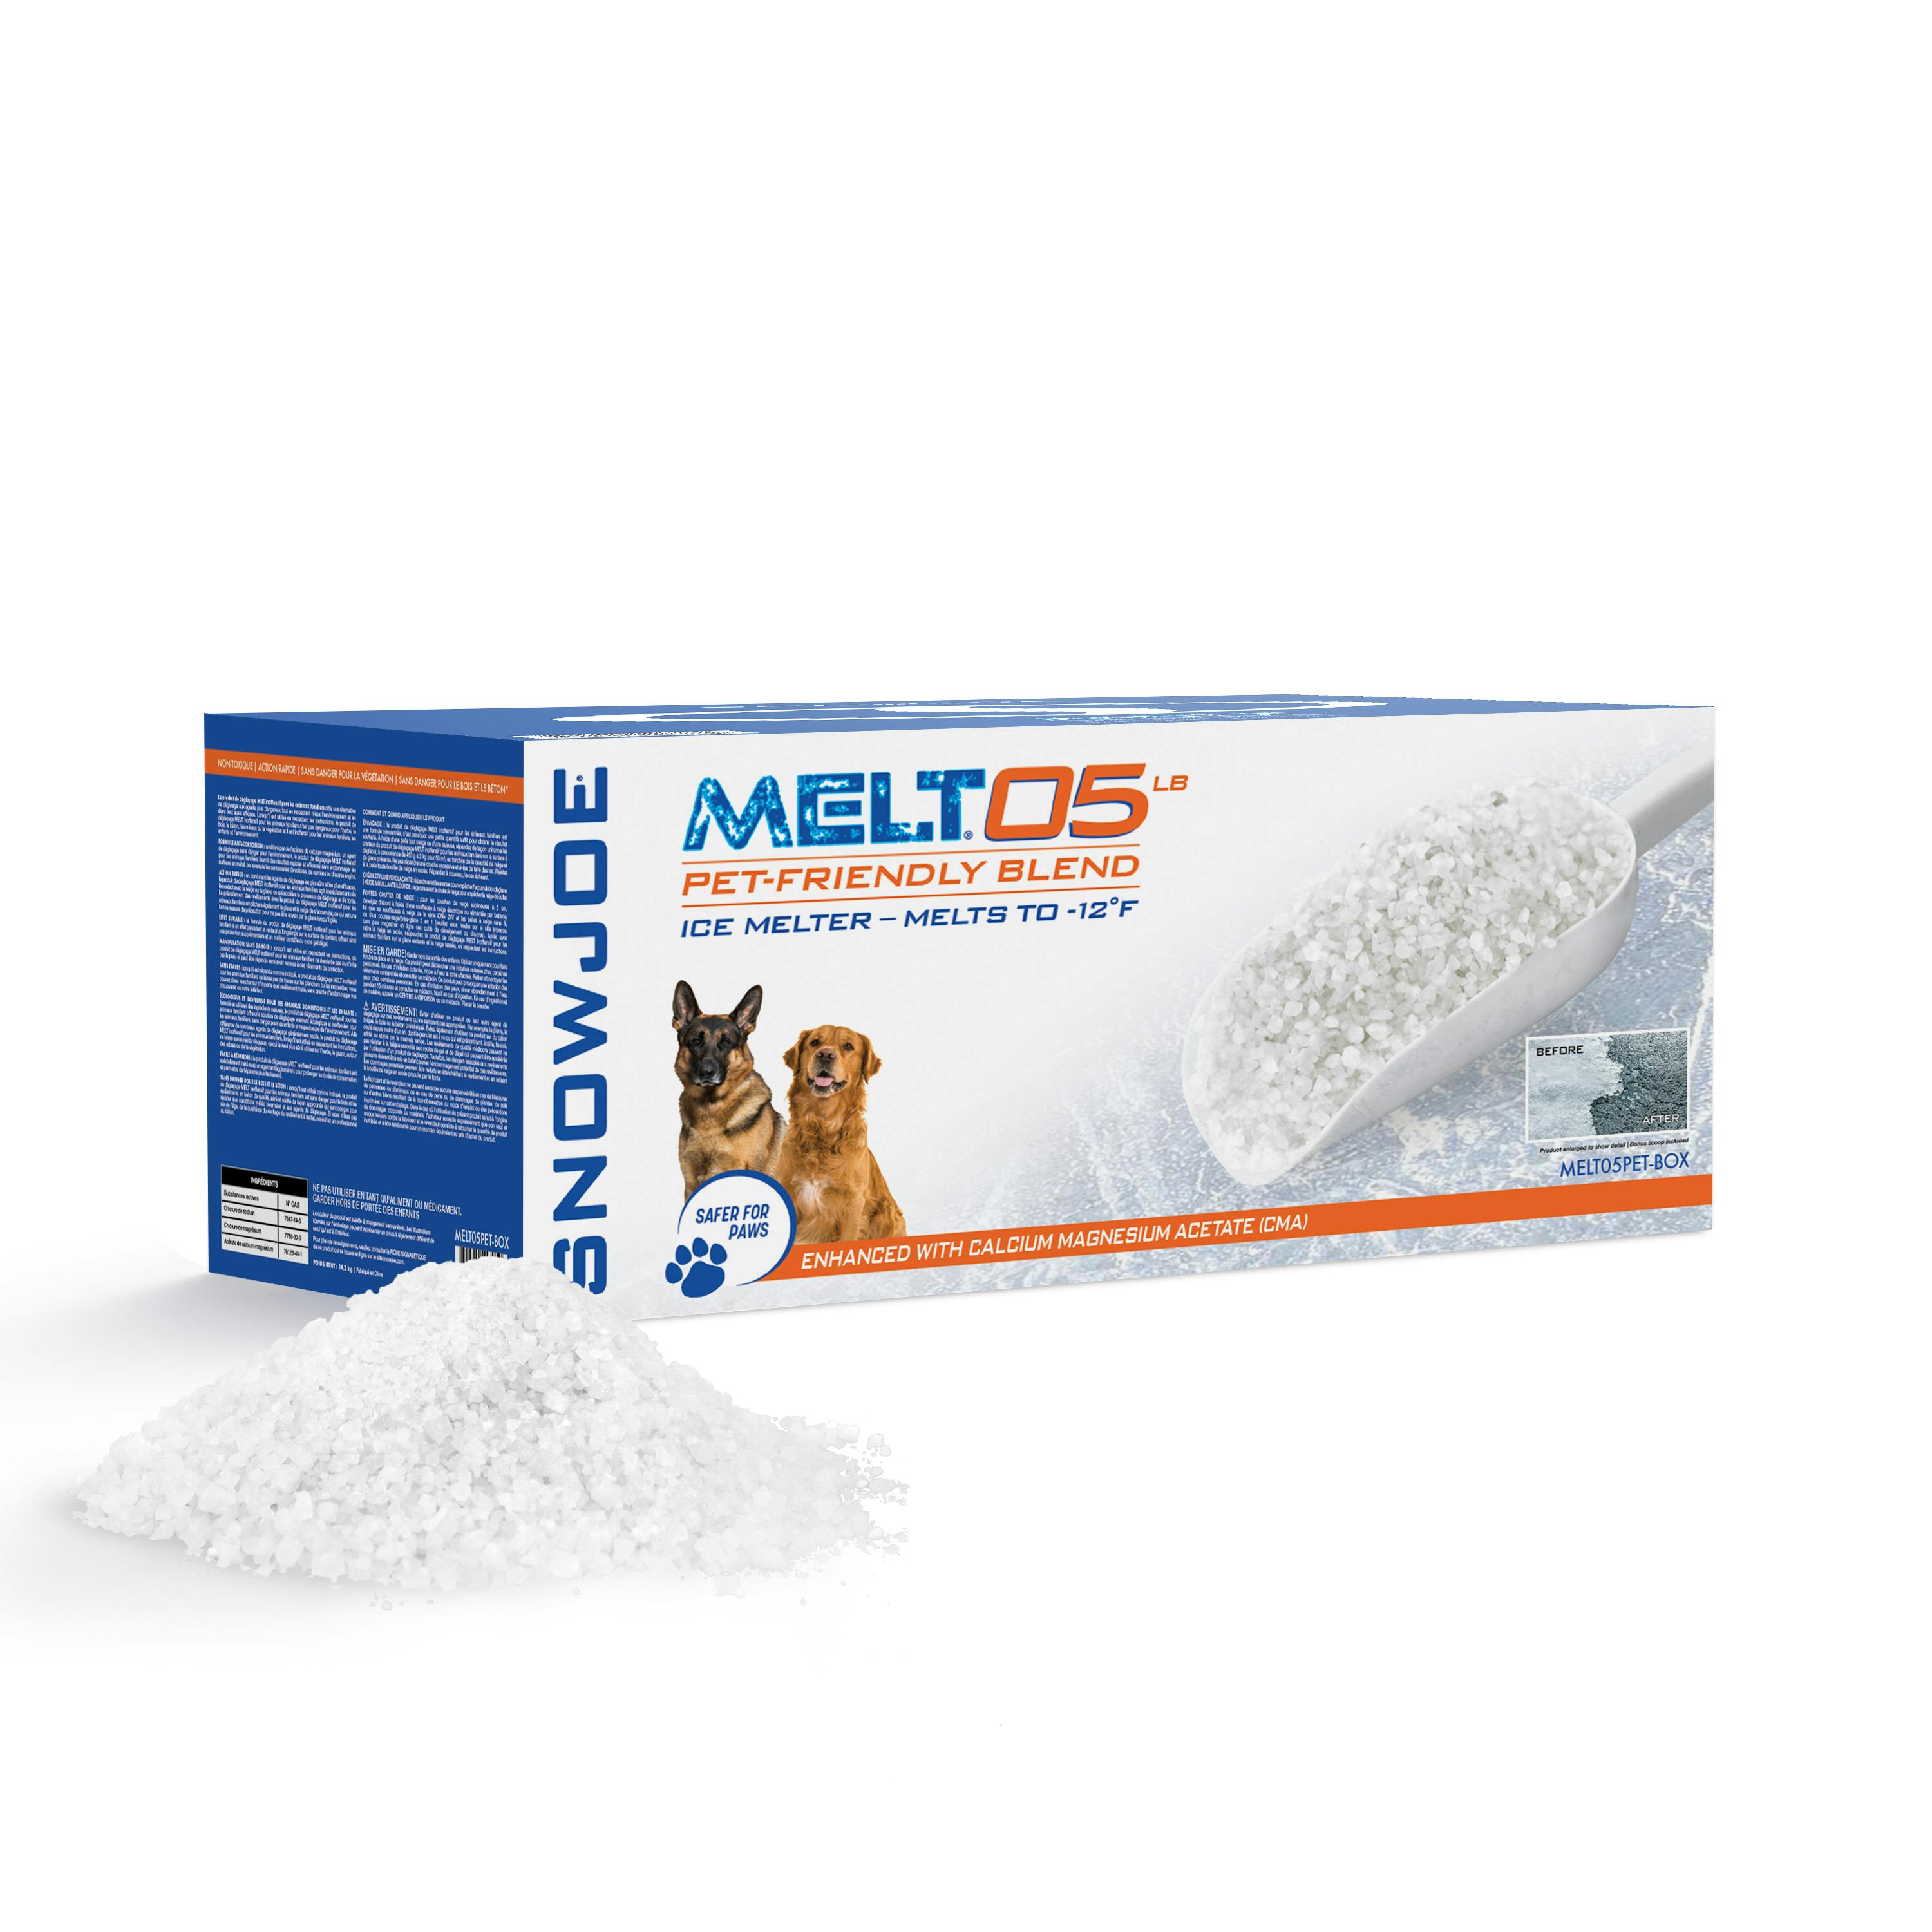 Snow Joe® Environment Friendly Sodium Chloride, Magnesium Chloride Ice Melt  - 30 lb Box with Scoop at Menards®